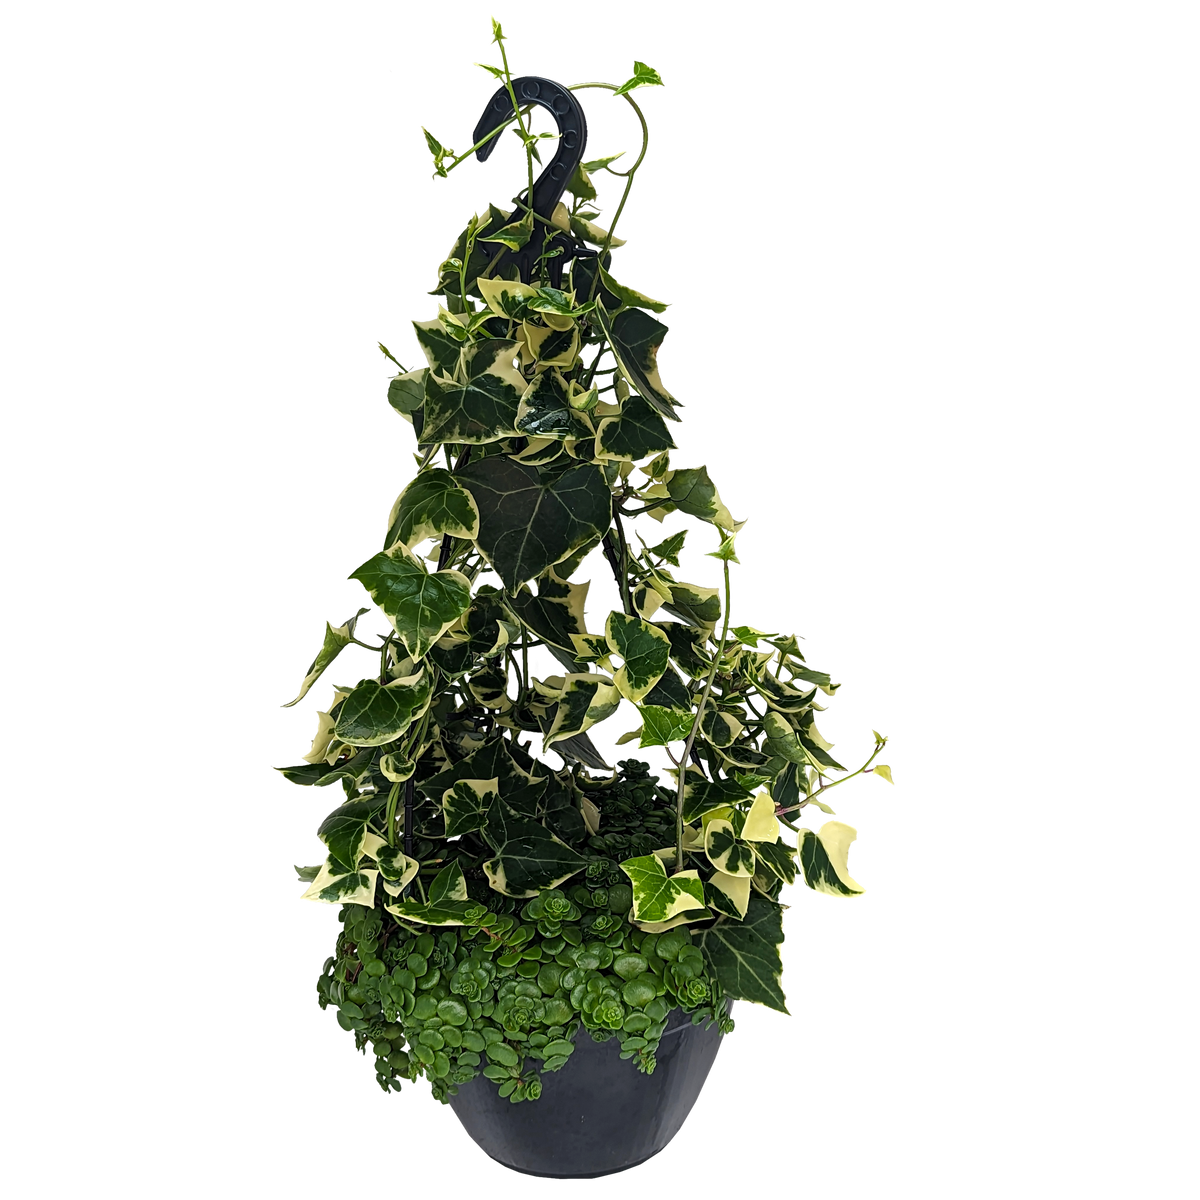 Combination hanging basket of variegated german ivy and sedum green mound.